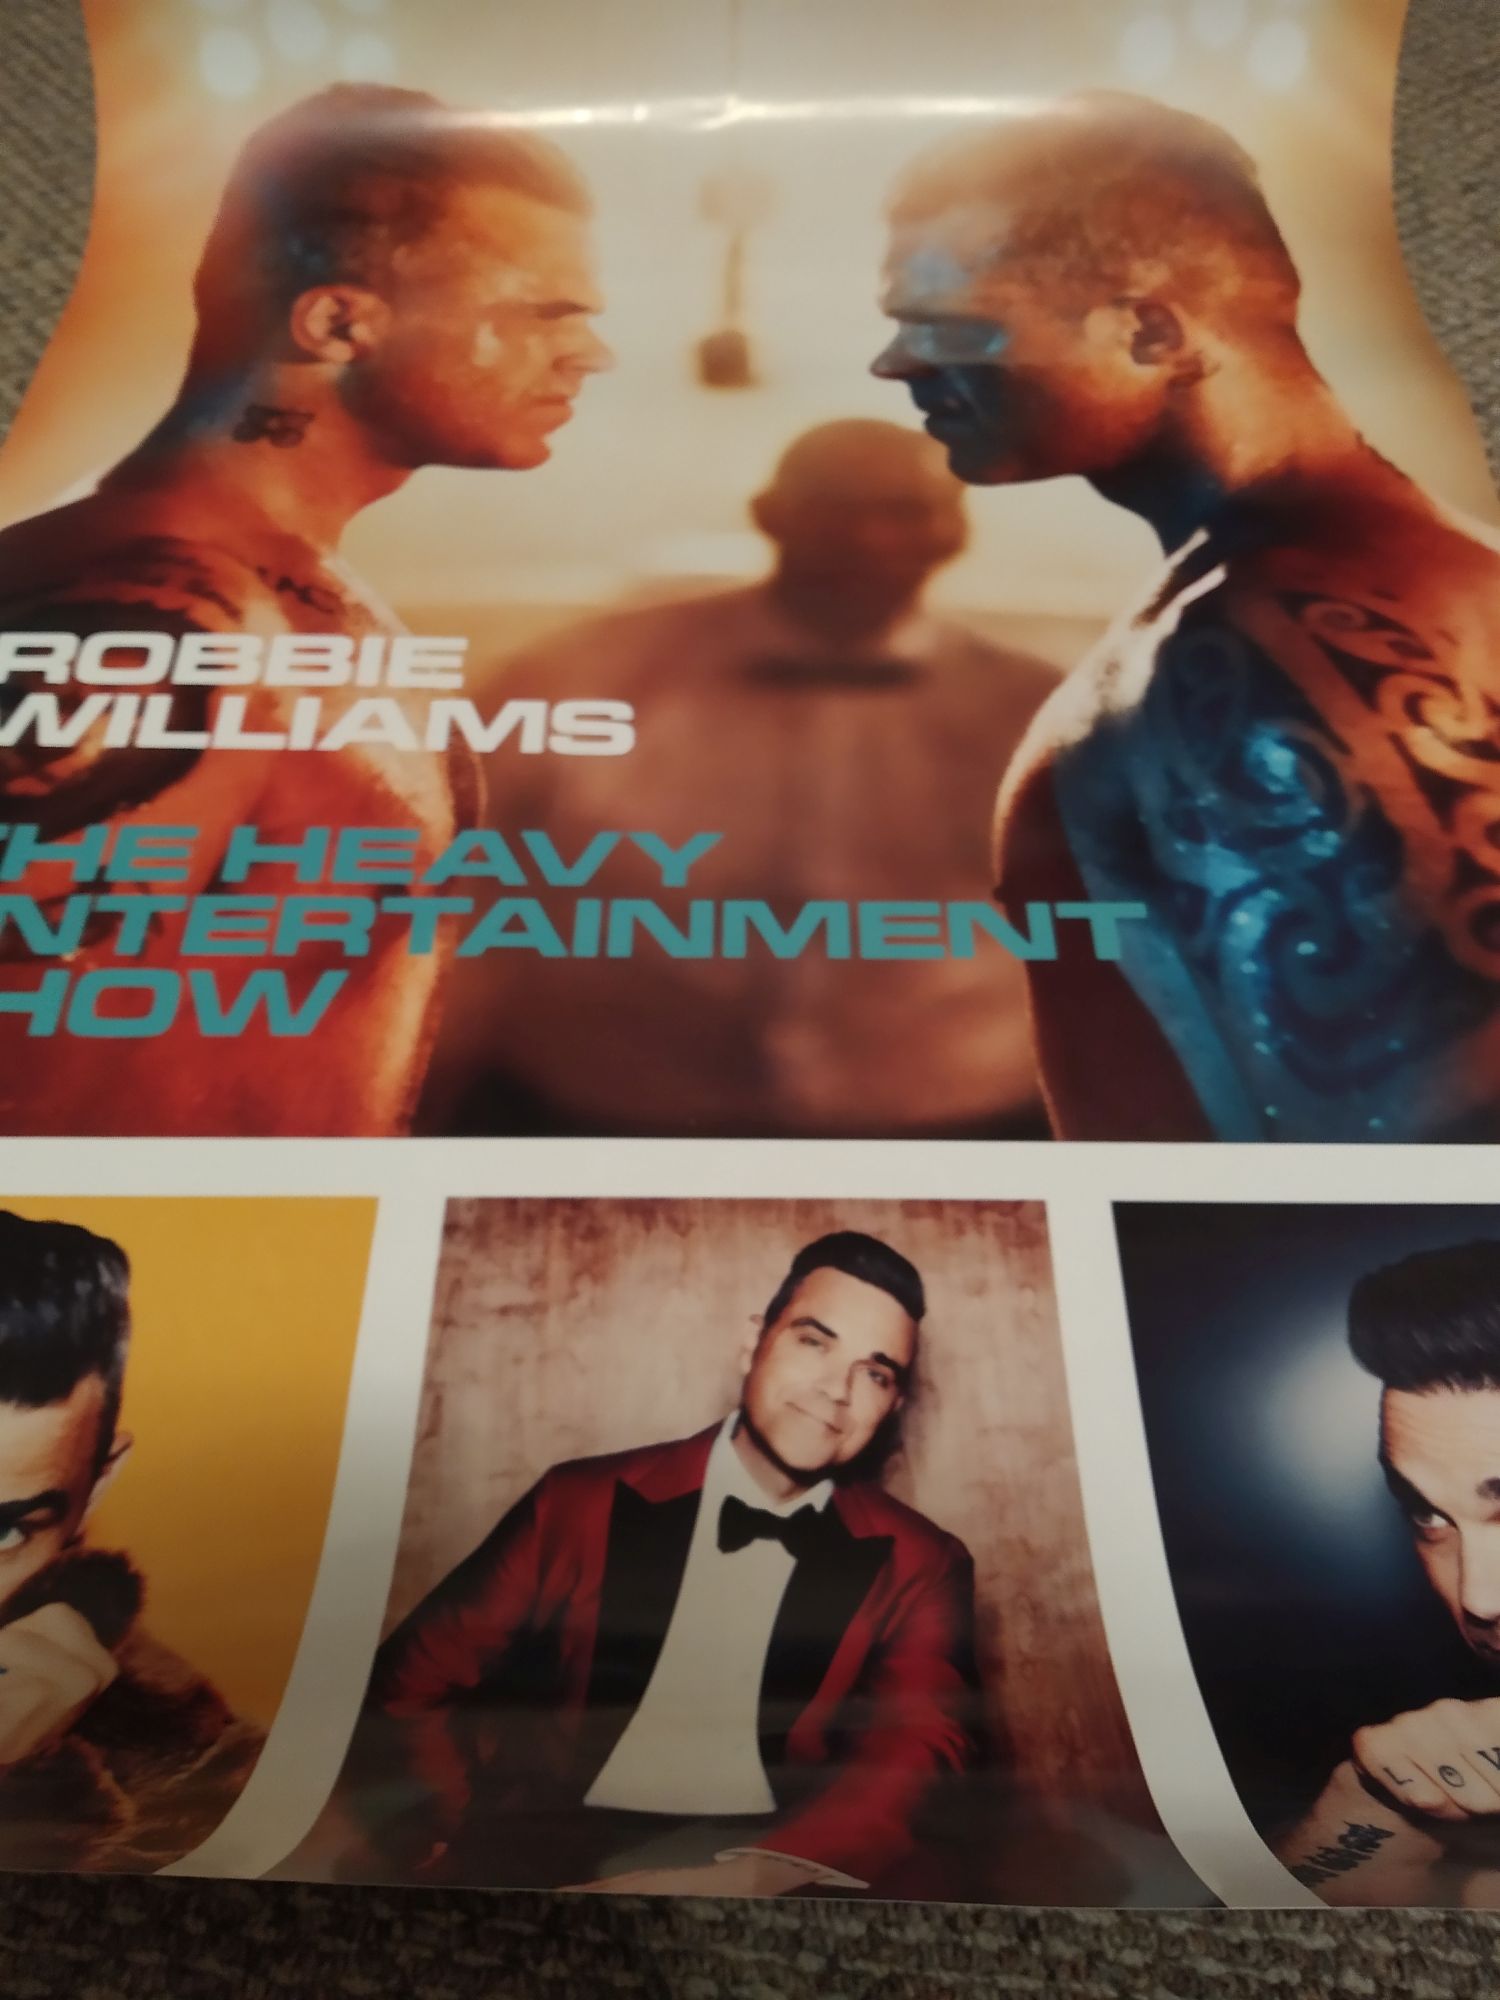 Robbie Williams - Heavy Entertainment Show - POSTER